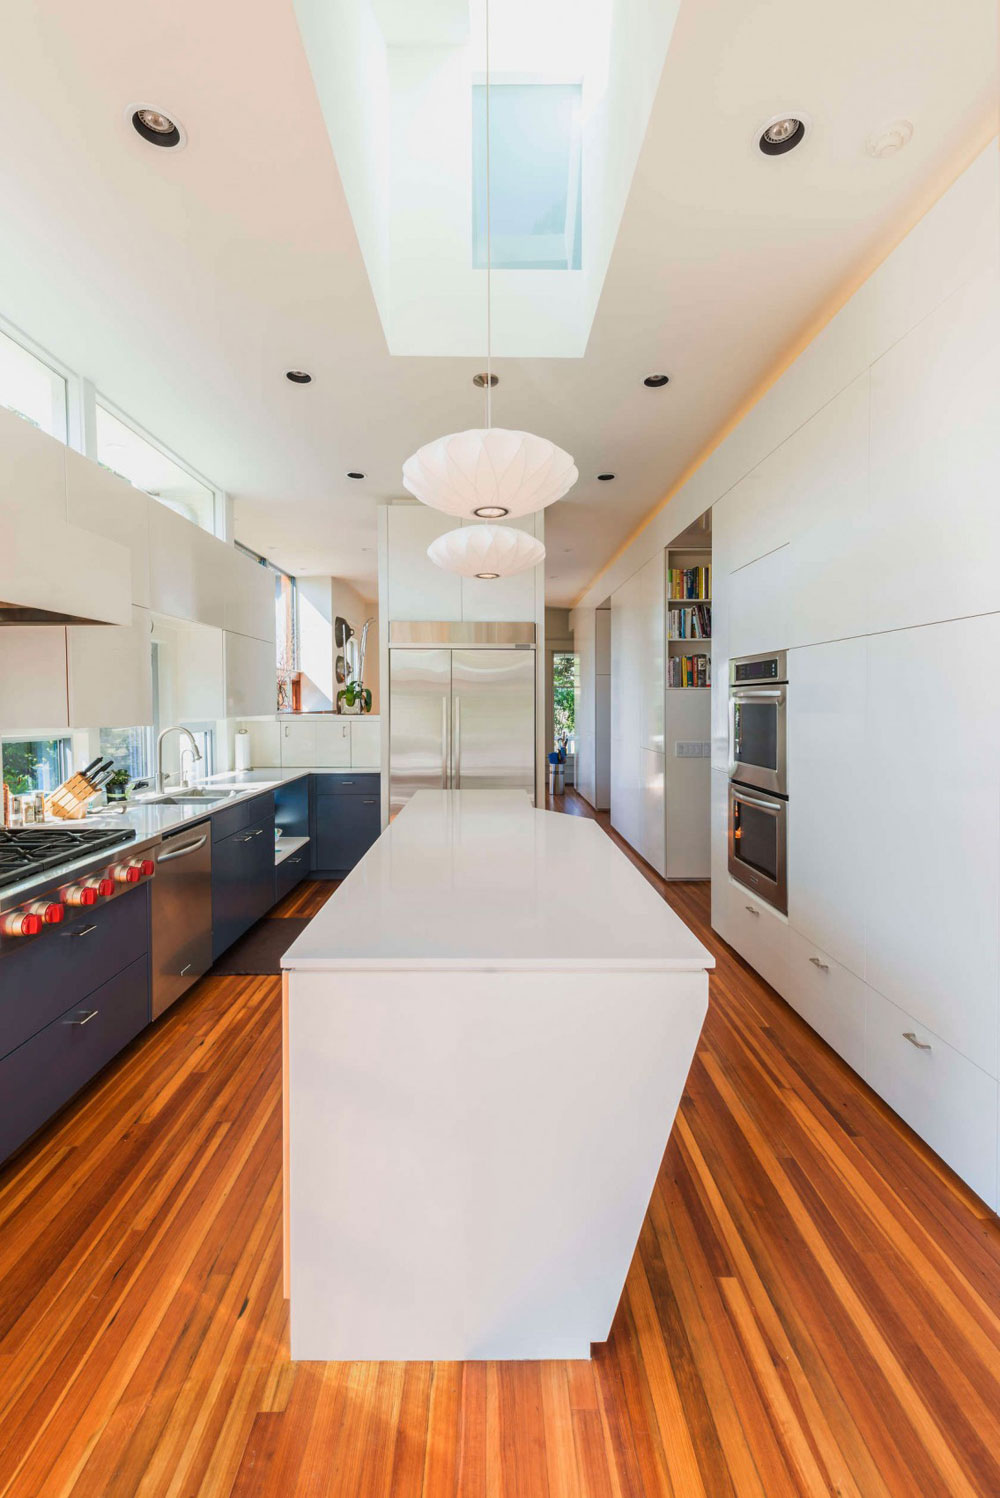 Kitchen-interior-design-for-apartments-to-create-the-perfect-kitchen-1-kitchen interior-design-for-apartments to create the perfect kitchen